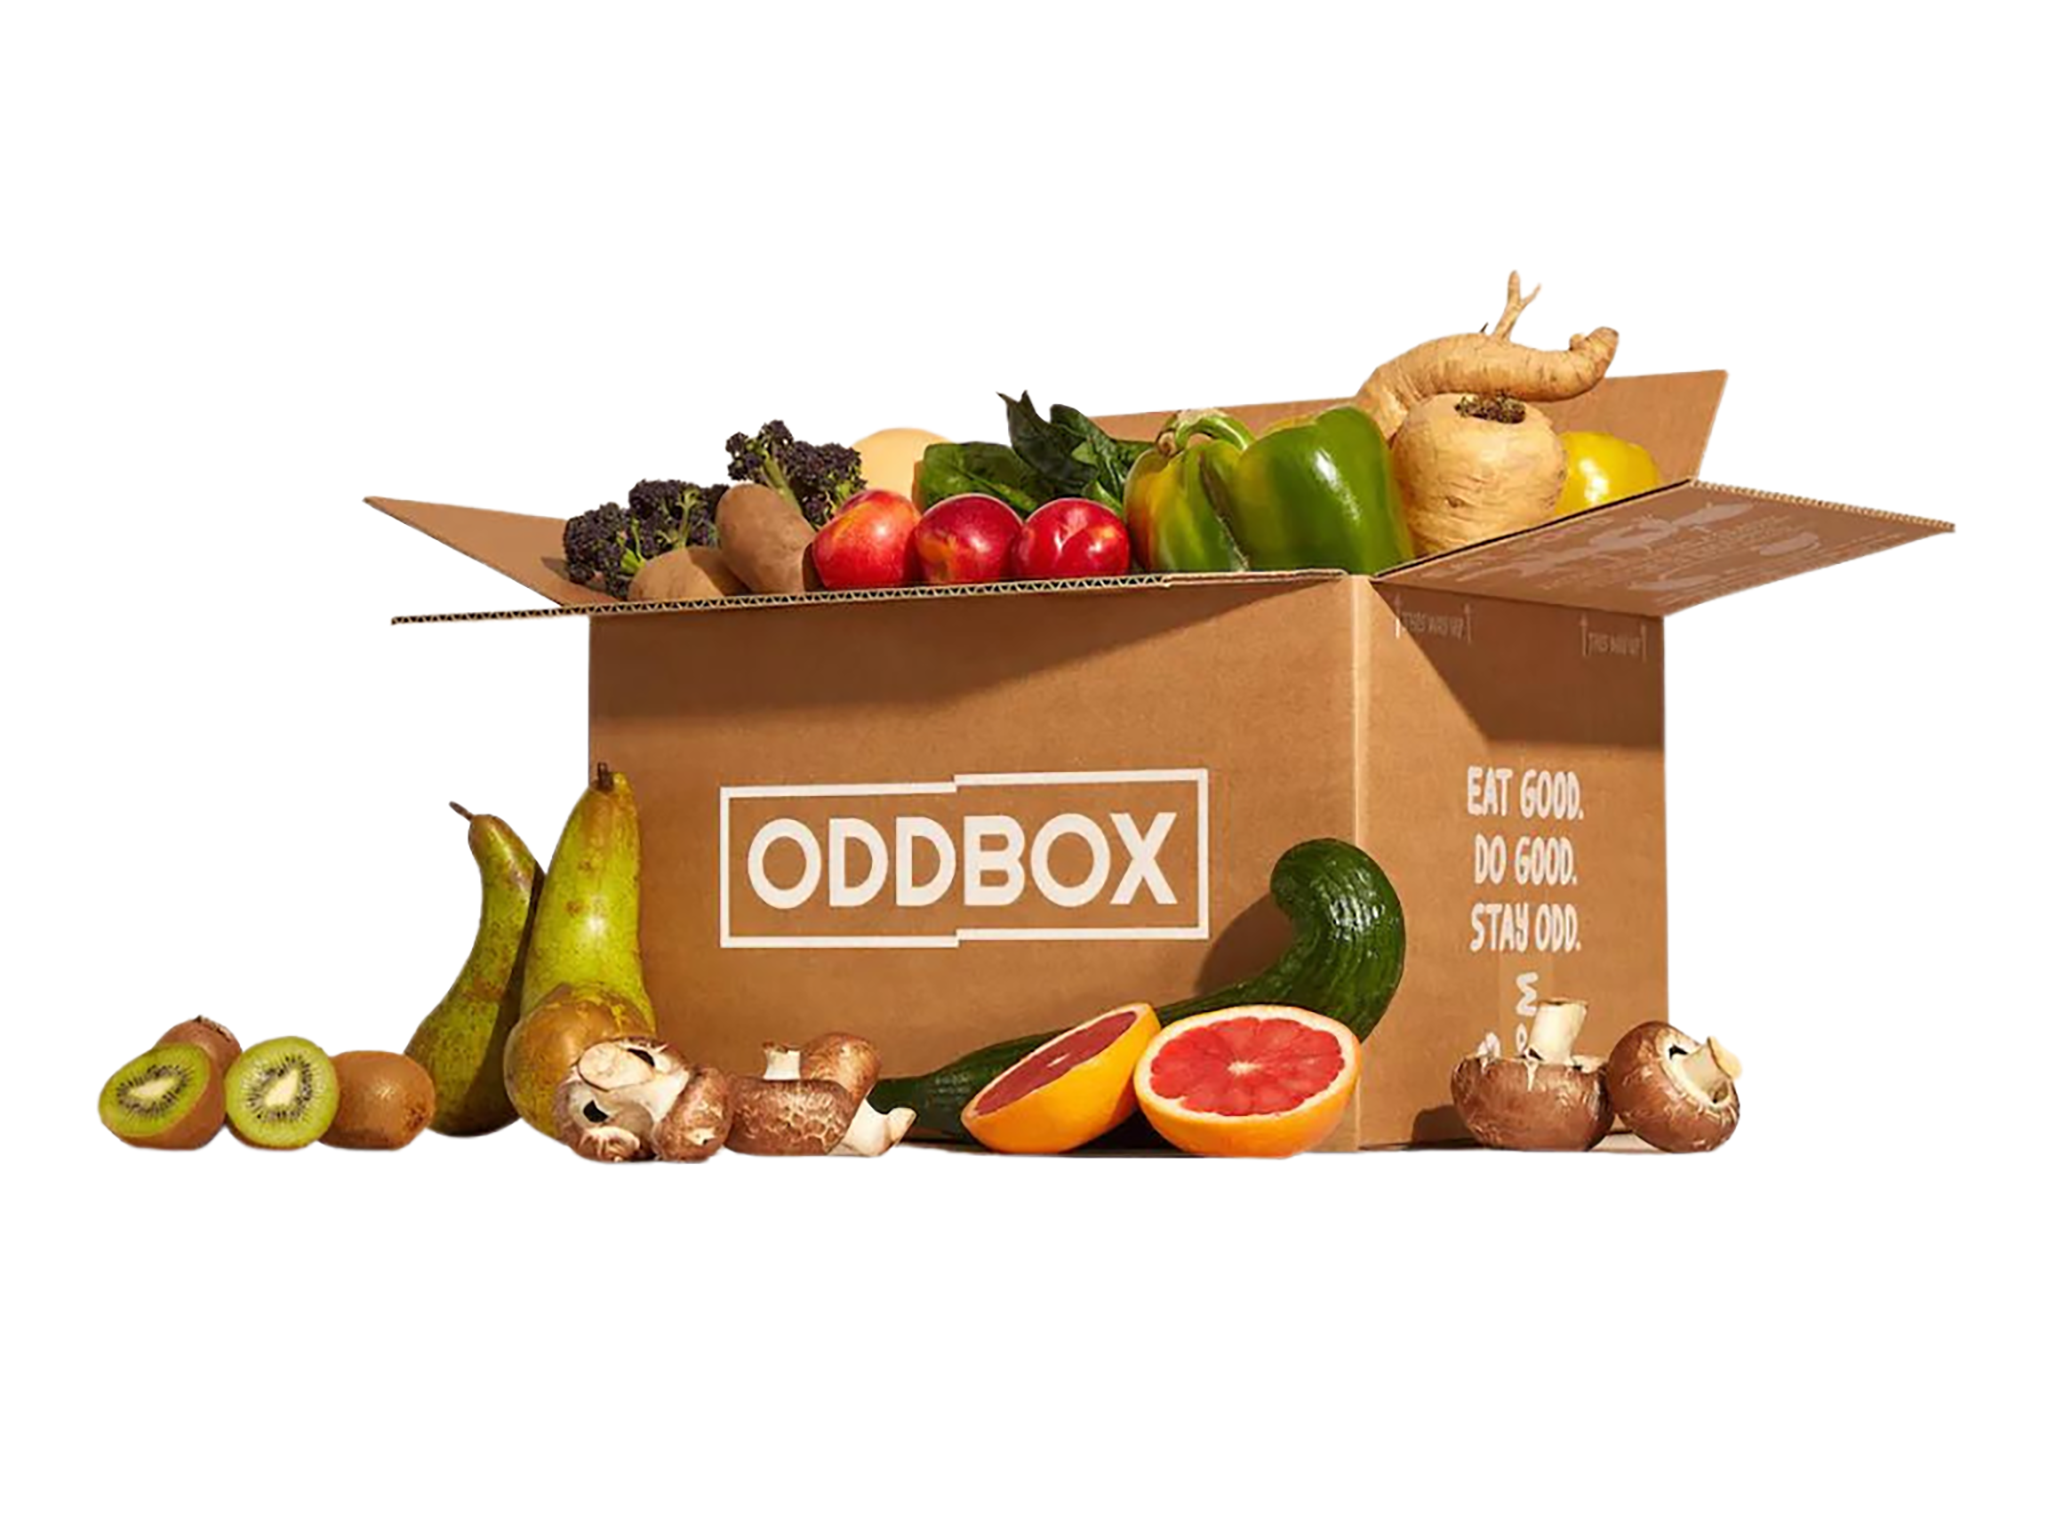 Oddbox food box